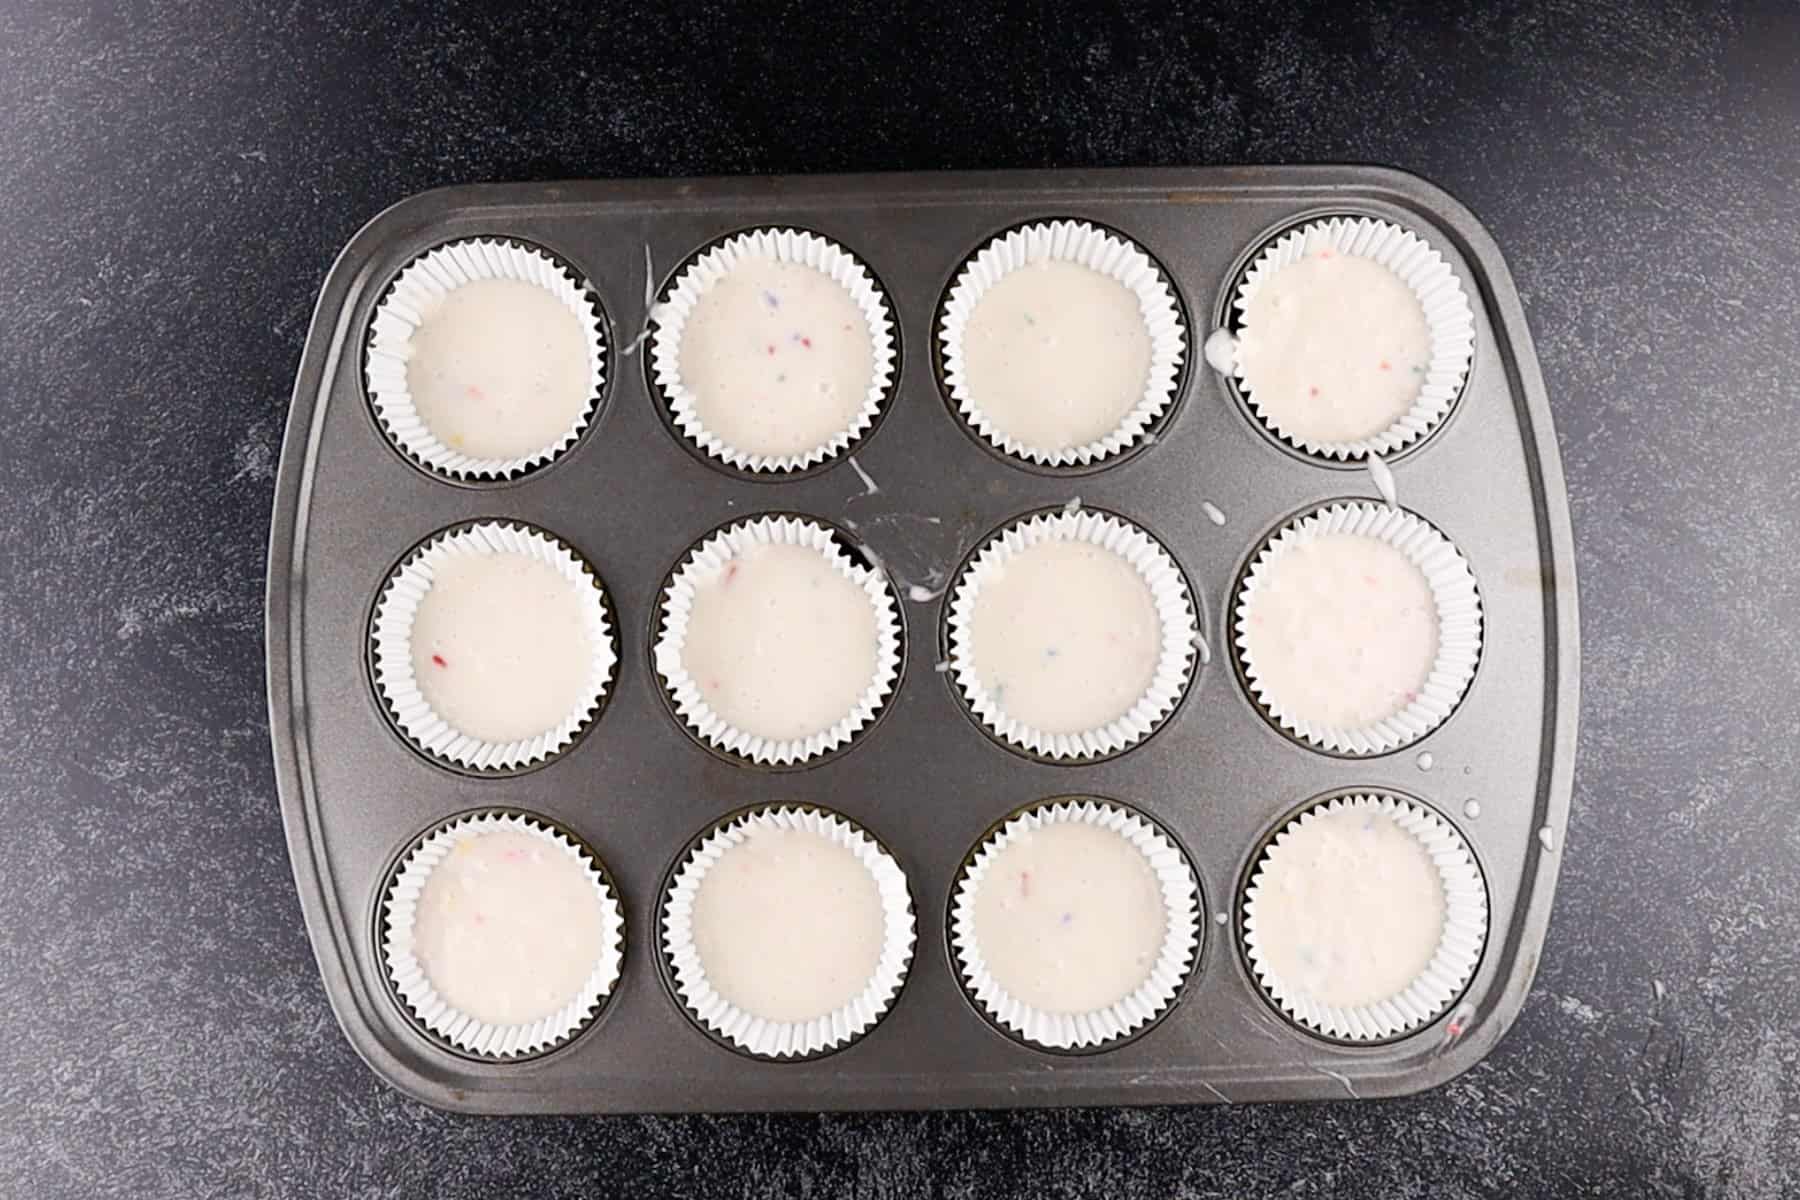 funfetti cupcakes before baking